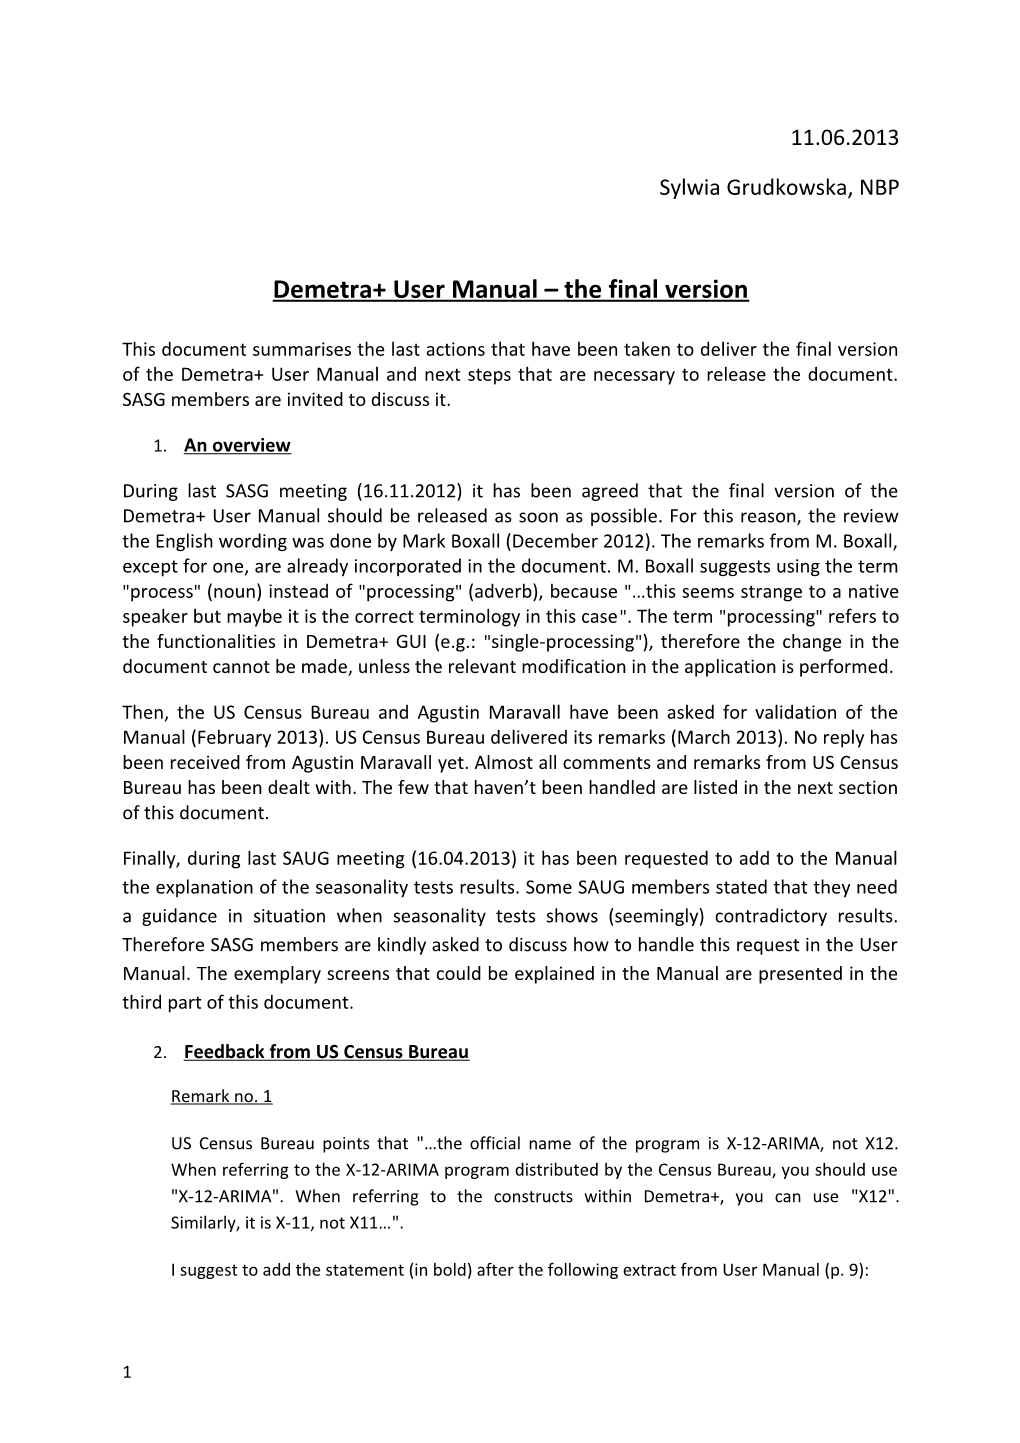 Demetra+ User Manual the Final Version